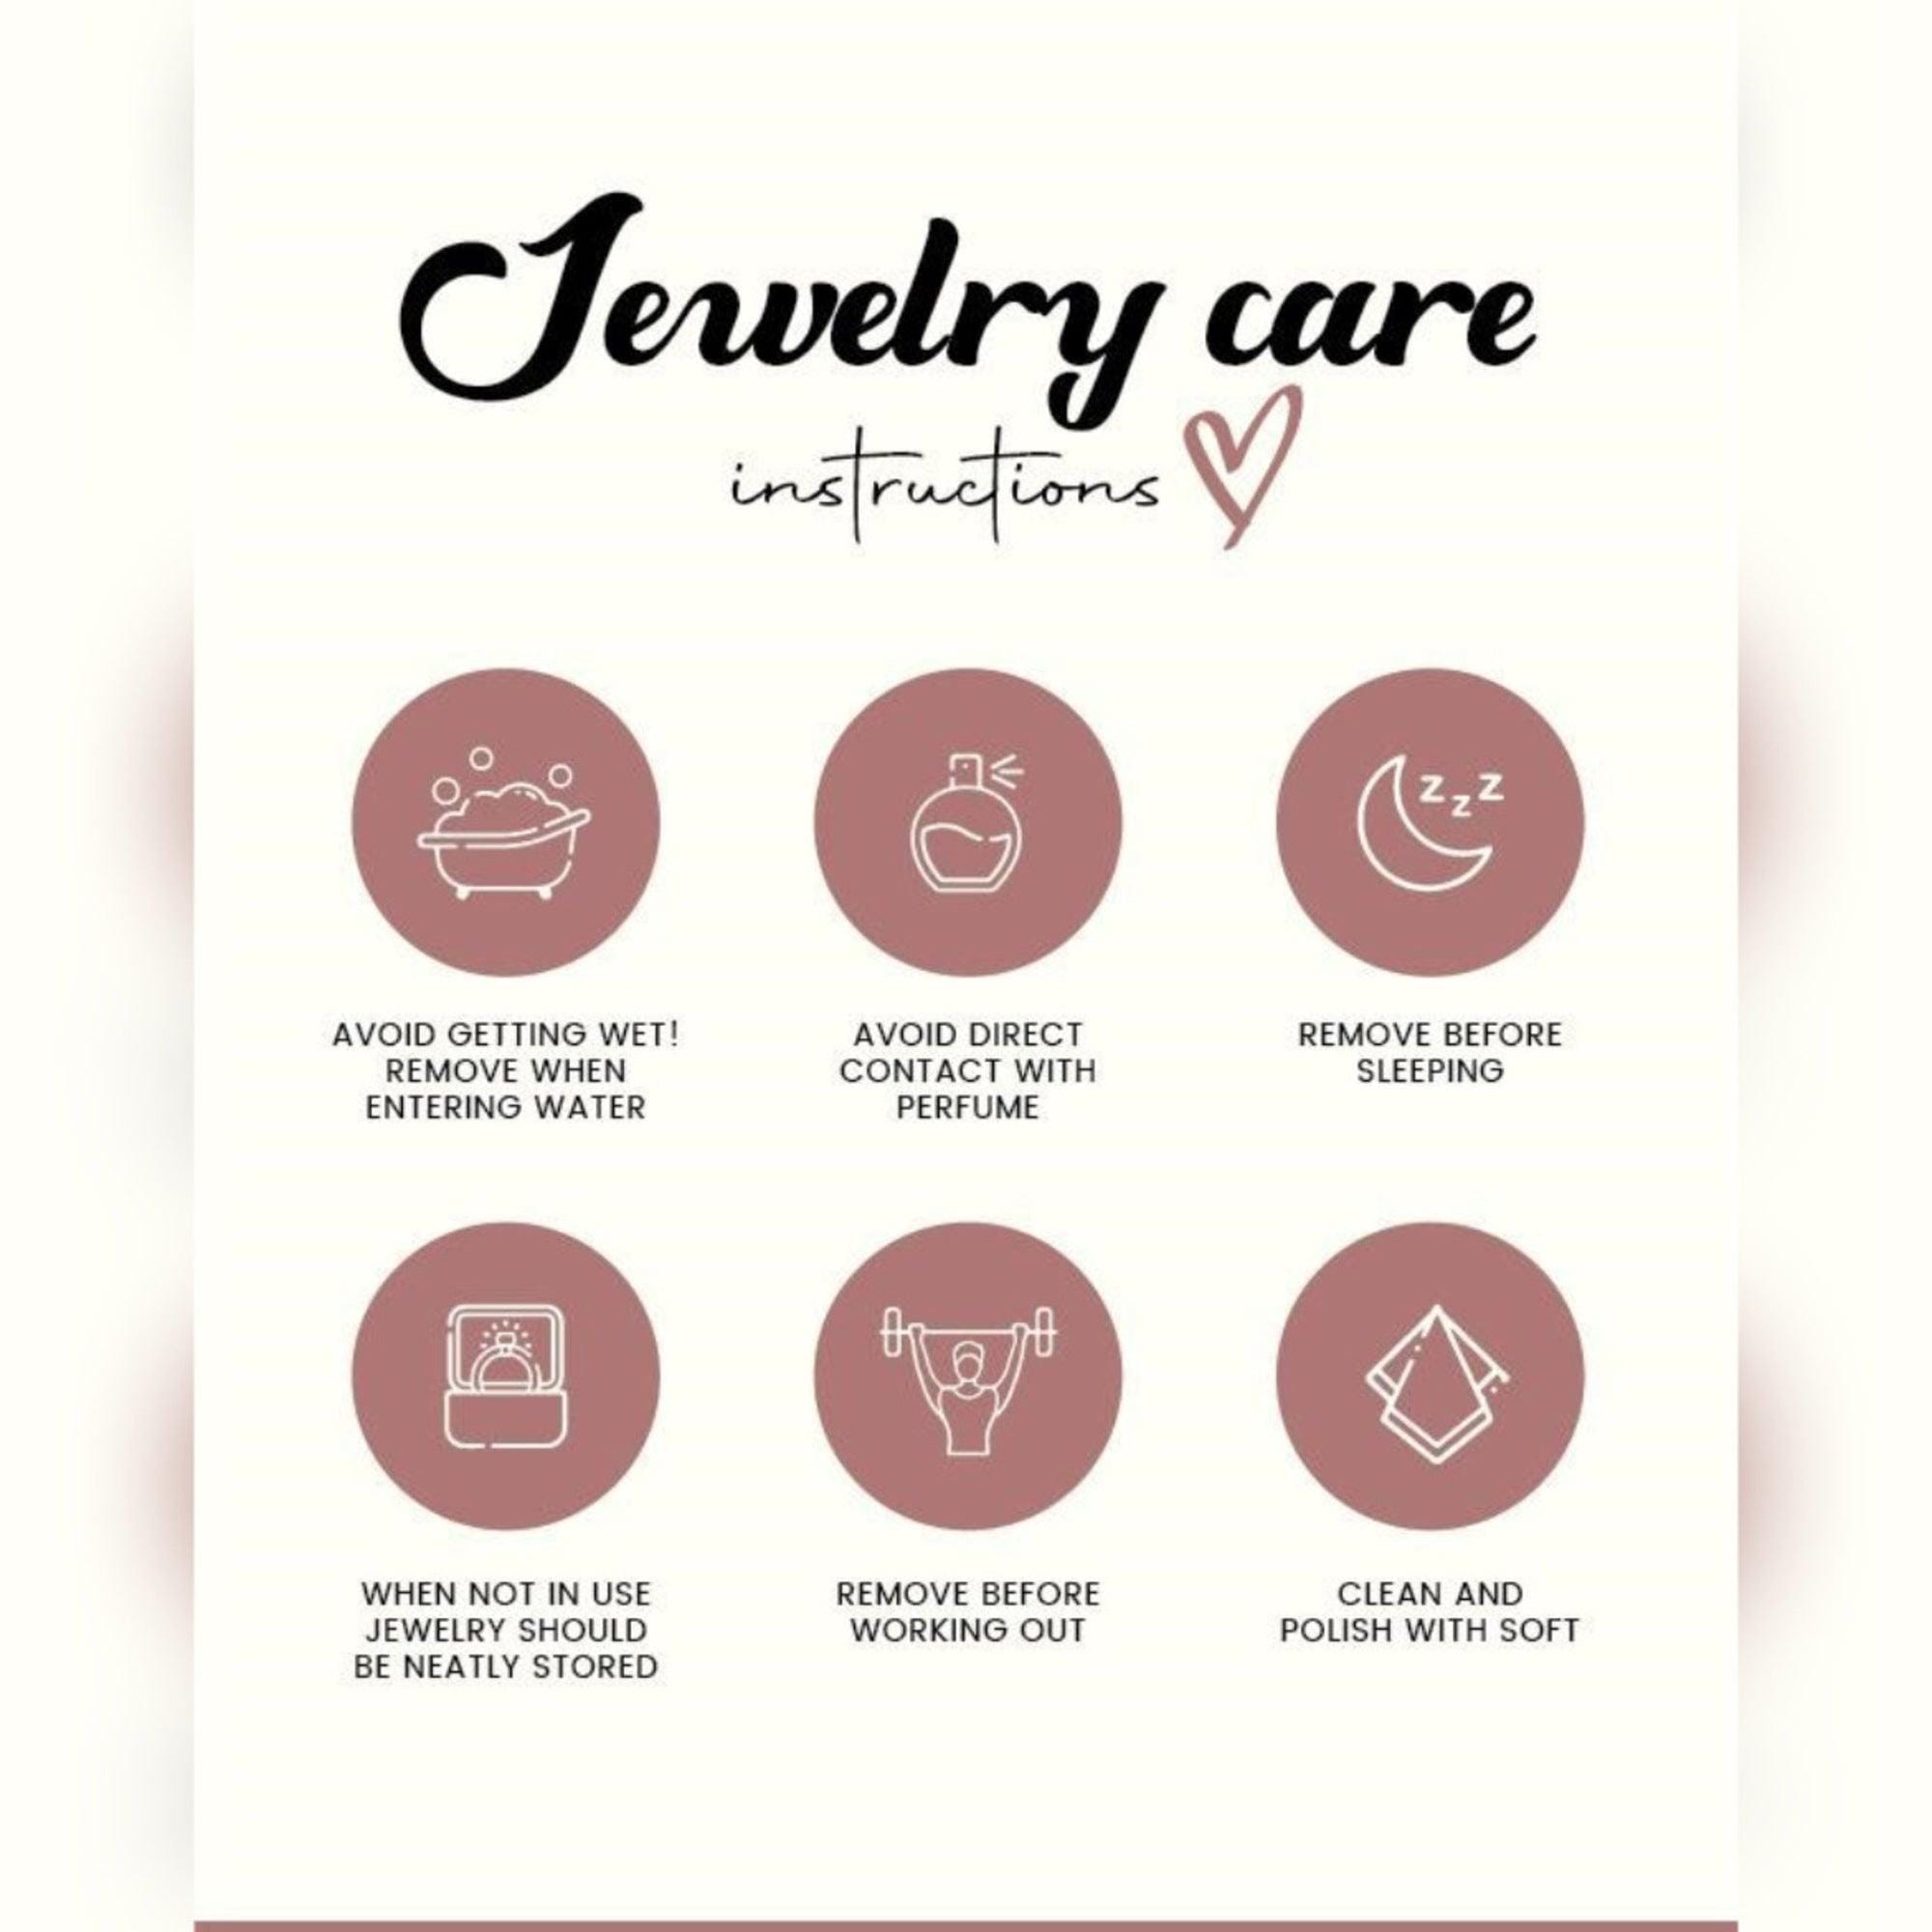 Natural Garnet Cut Oval Shape Calibrated | Cut Gemstone Healing Crystal | Raw Gemstone for Jewelry making | Unique Gemstone Cut SB-86 - Silverhubjewels